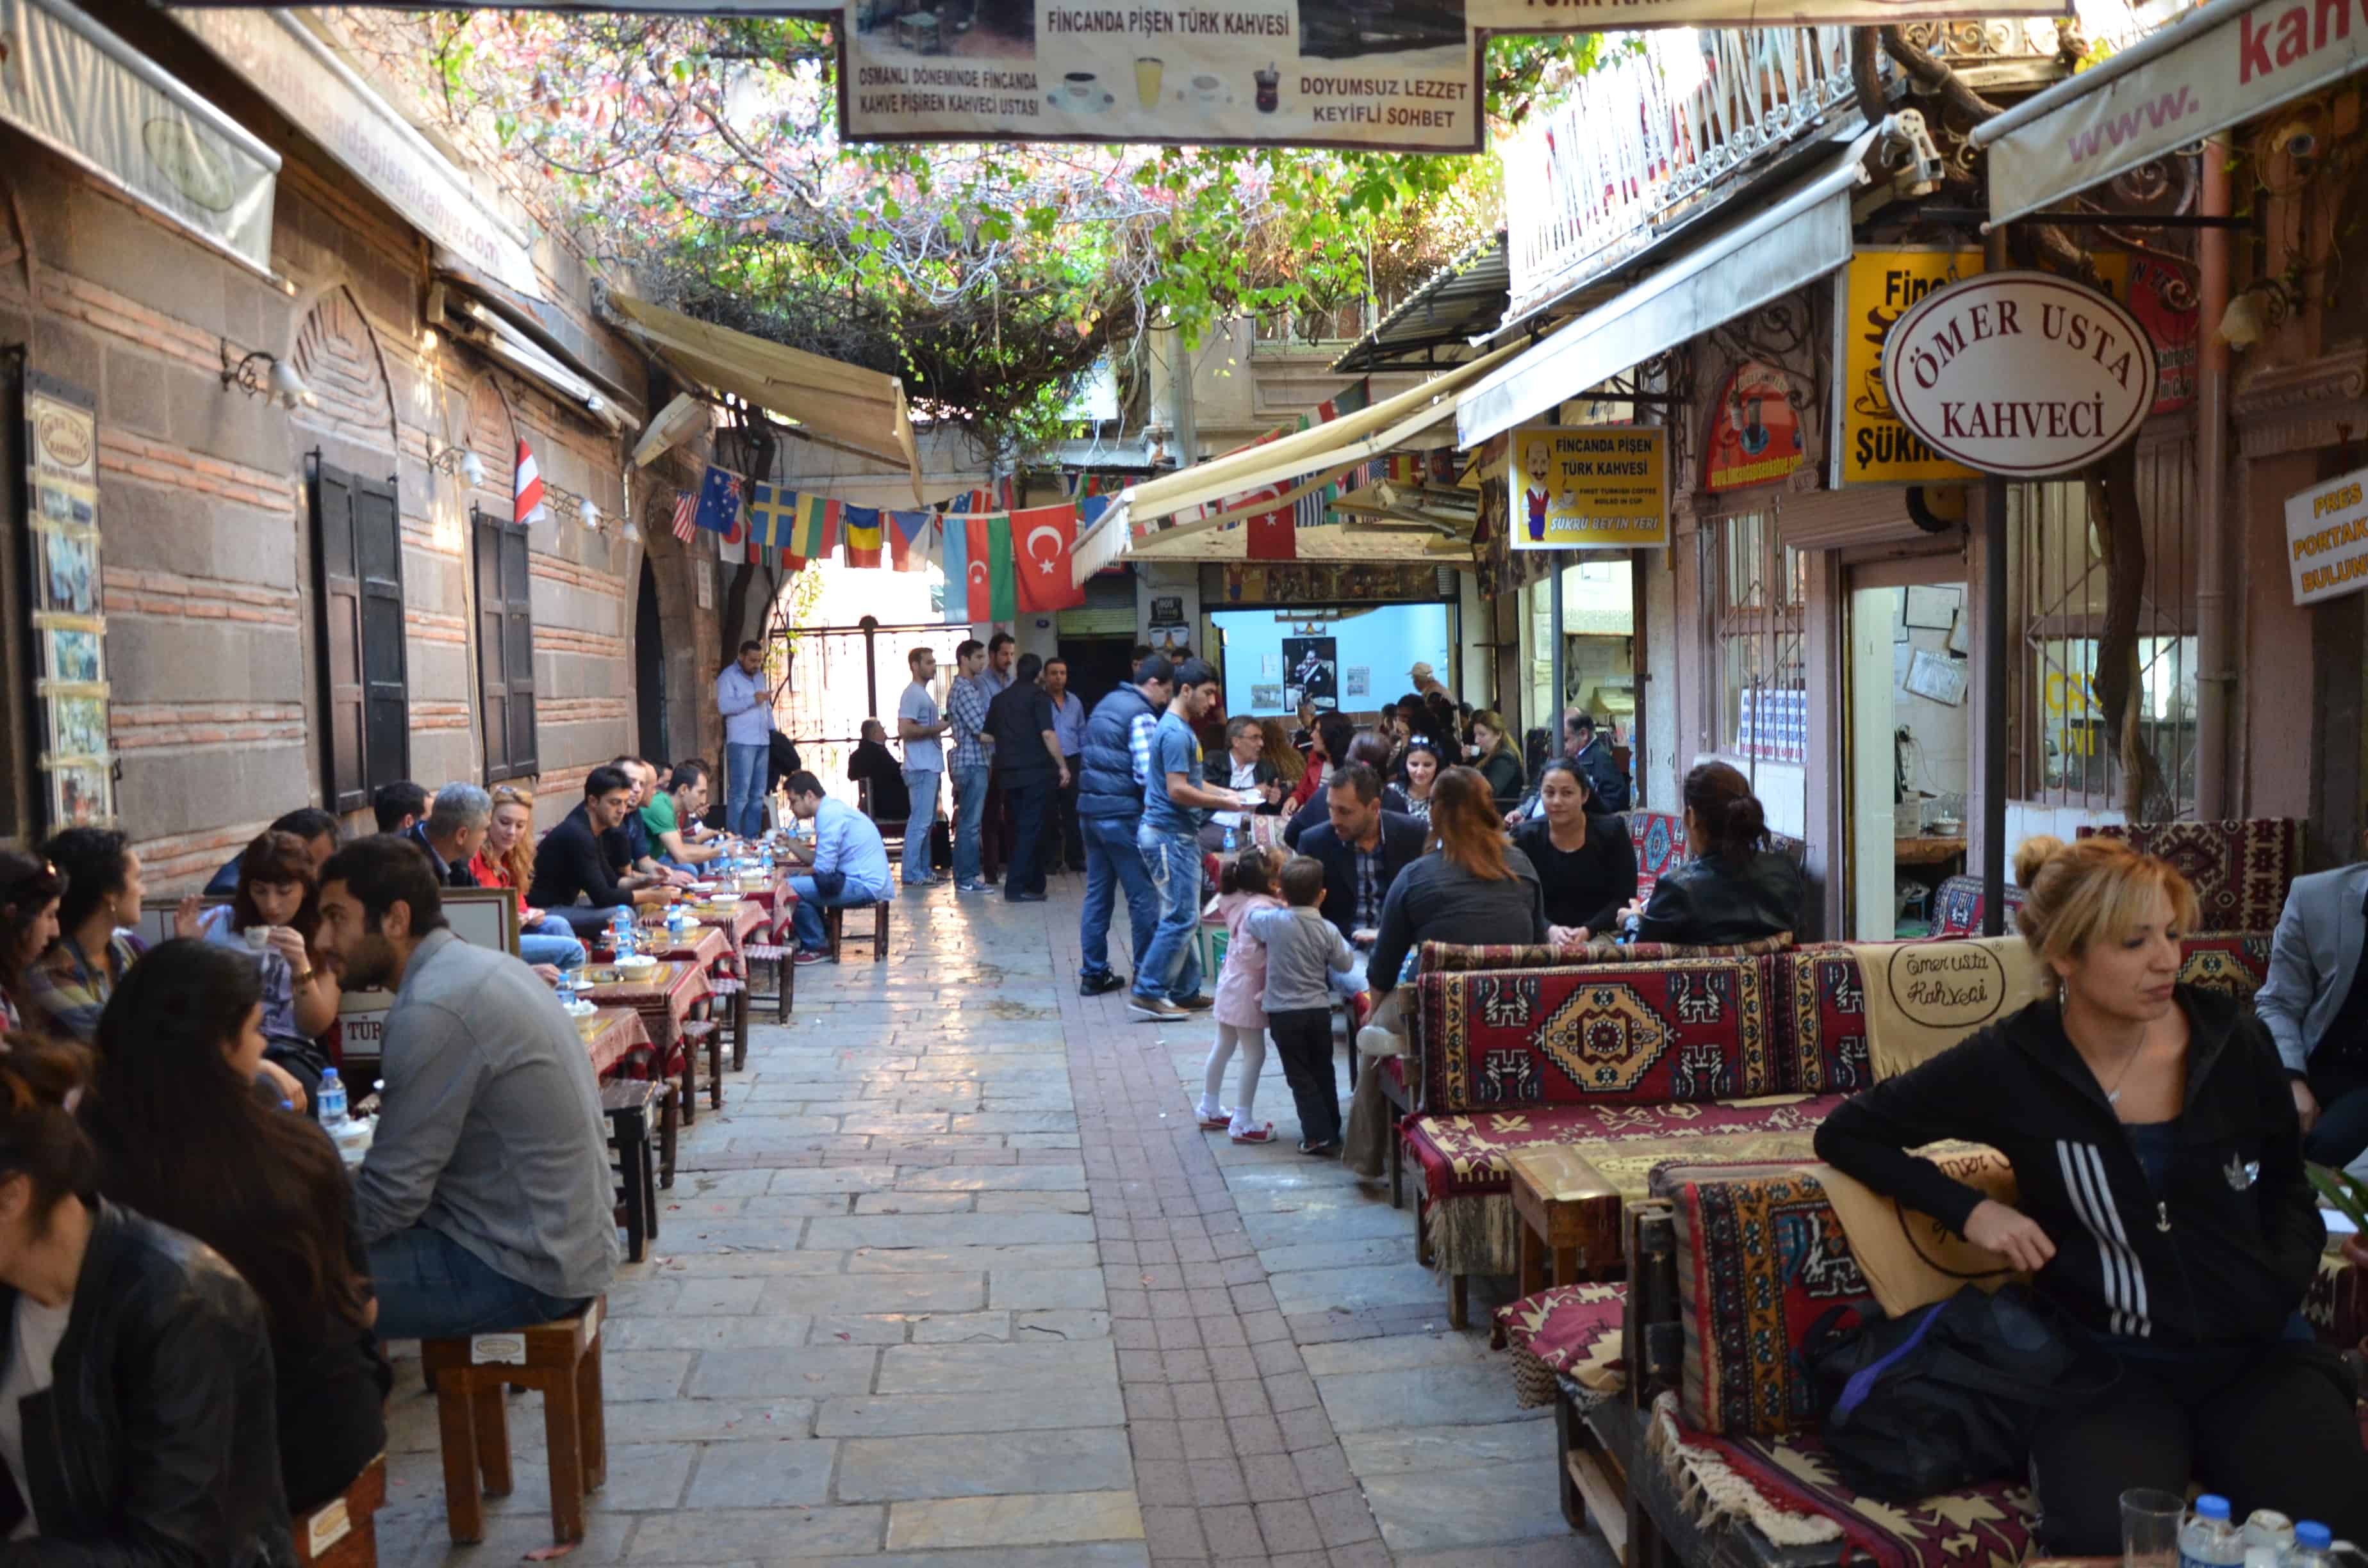 A side street next to Kızlarağası Hanı in Izmir, Turkey